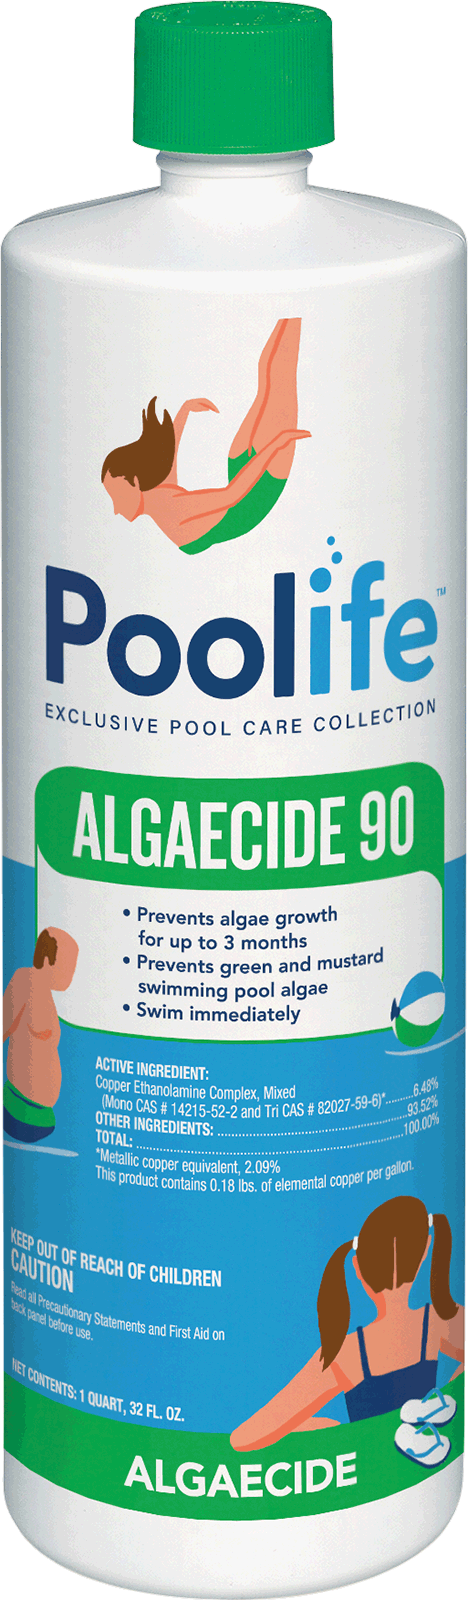 product_62088_Poolife_Algaecide90_32oz